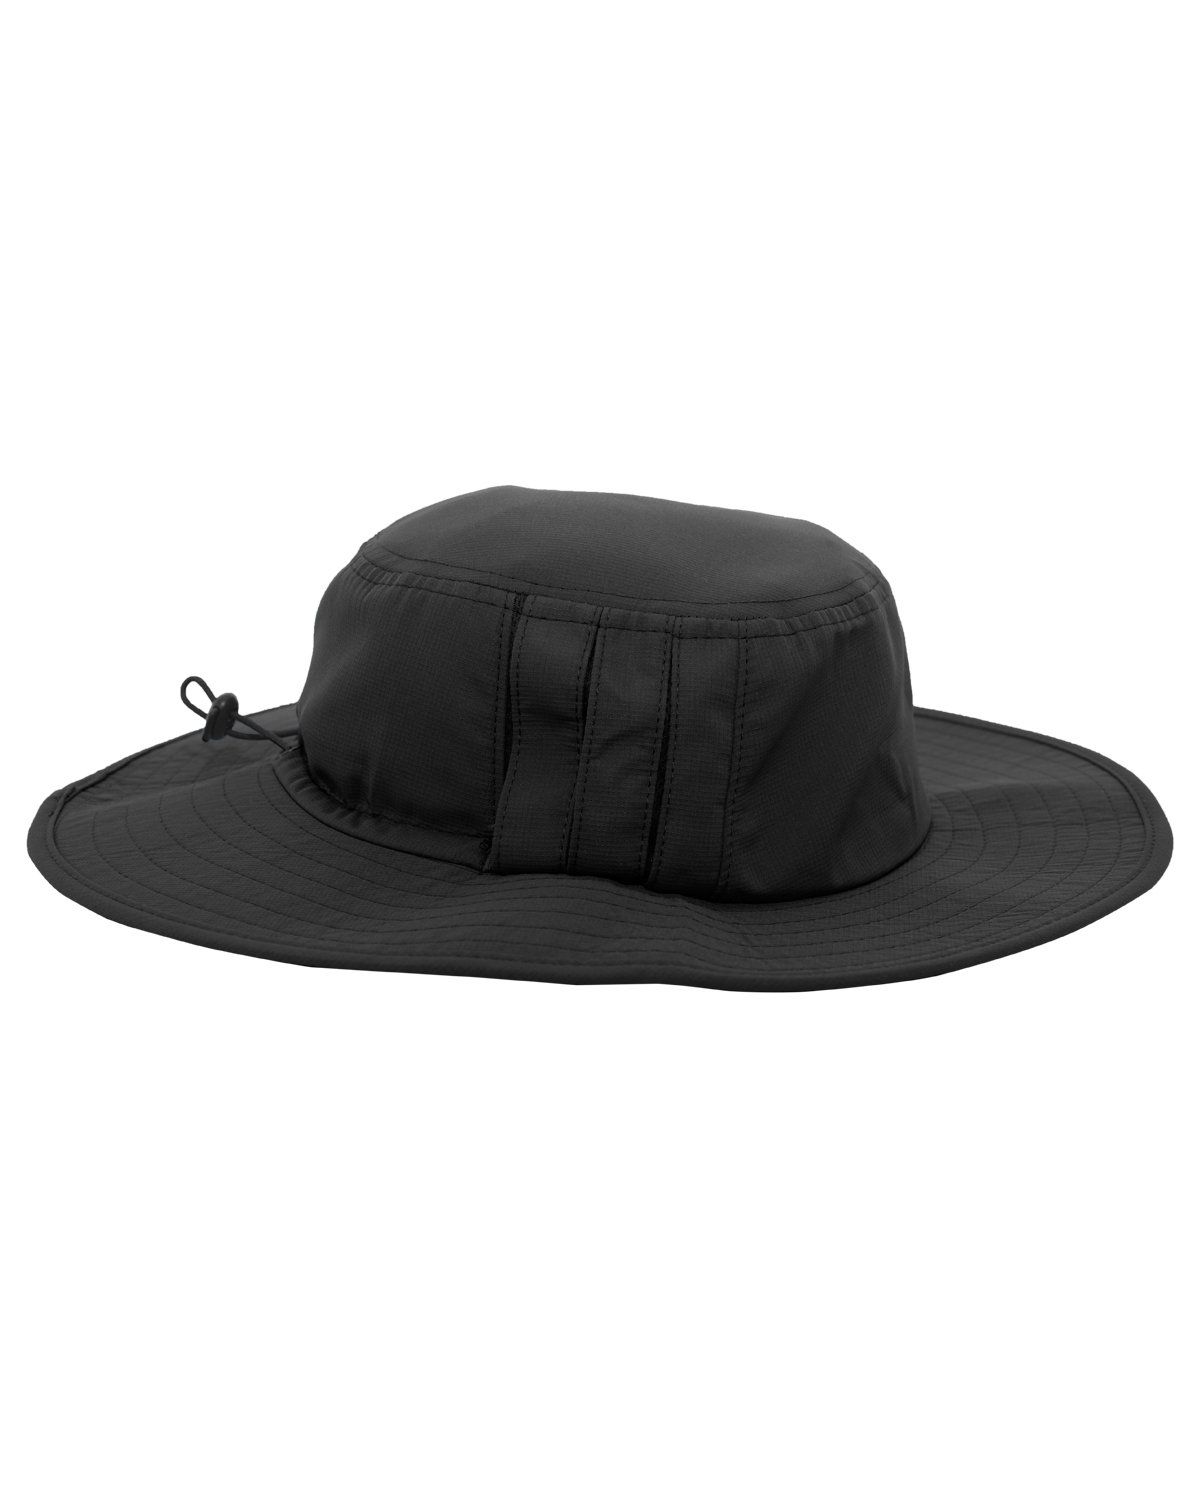 'Pacific Headwear 1946B Manta ray boonie hat'